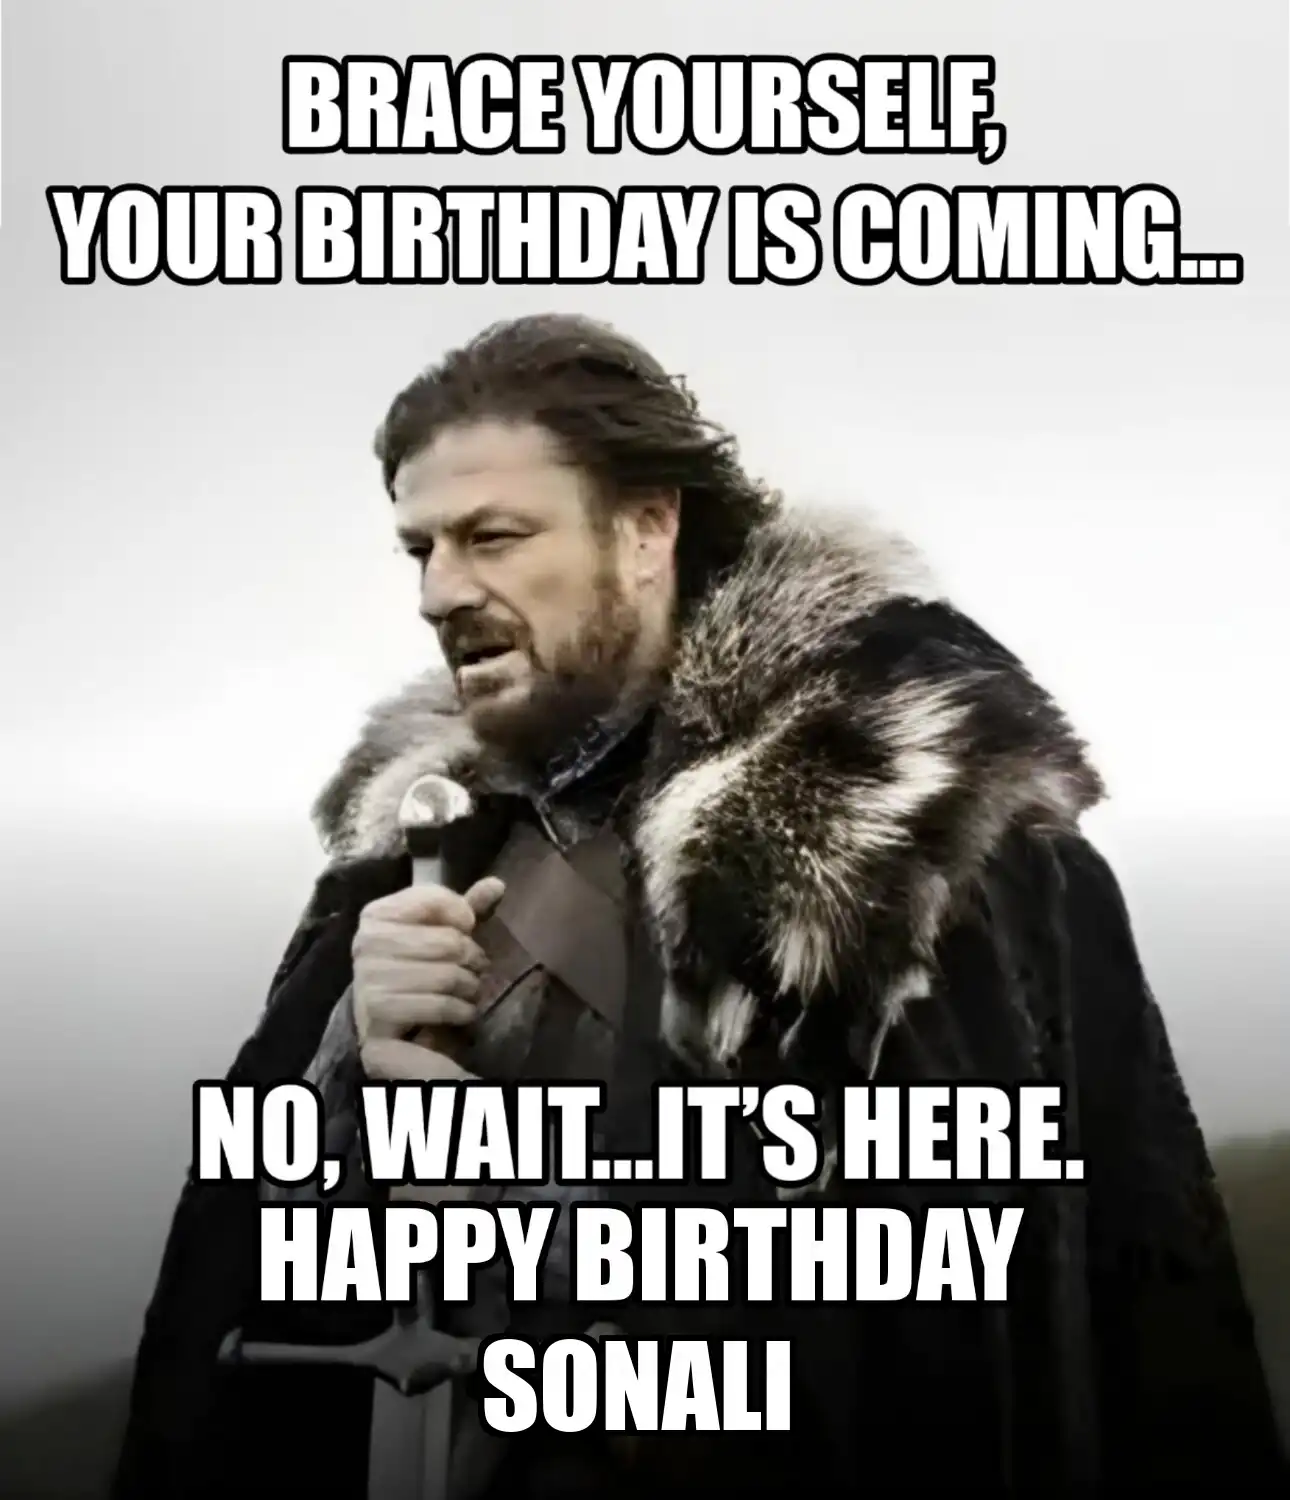 Happy Birthday Sonali Brace Yourself Your Birthday Is Coming Meme